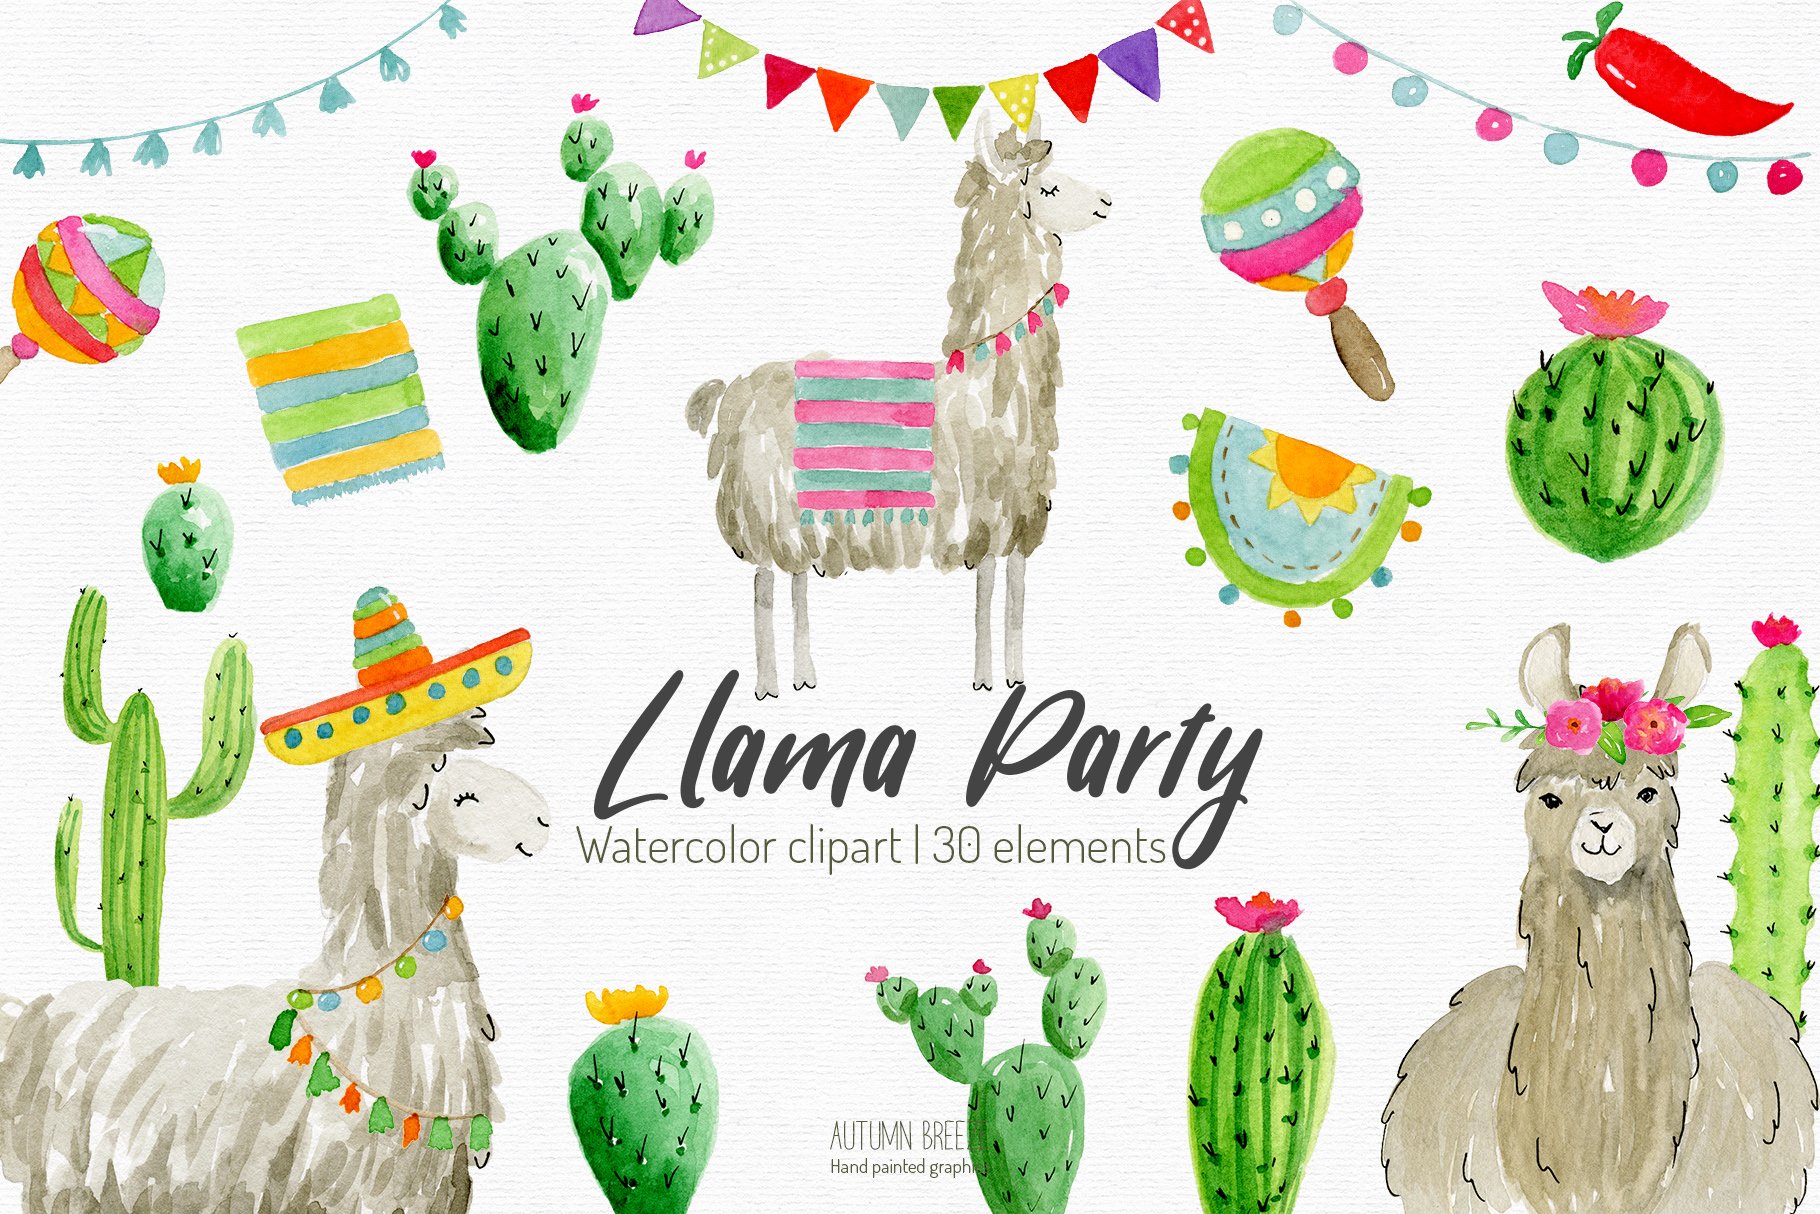 watercolor  llama clipart cover image.